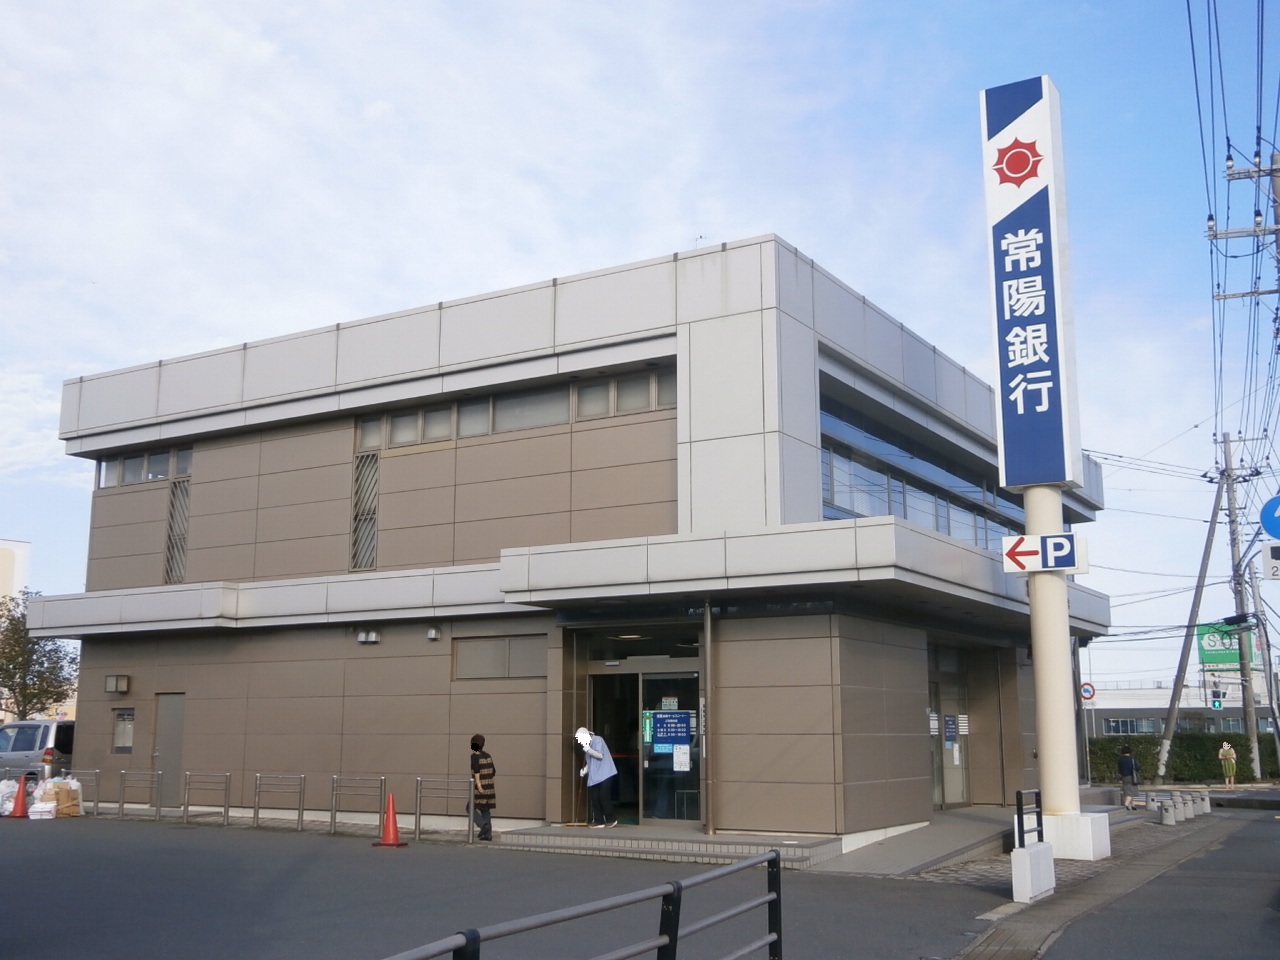 Bank. 2697m to Joyo Bank Kashima East Branch (Bank)